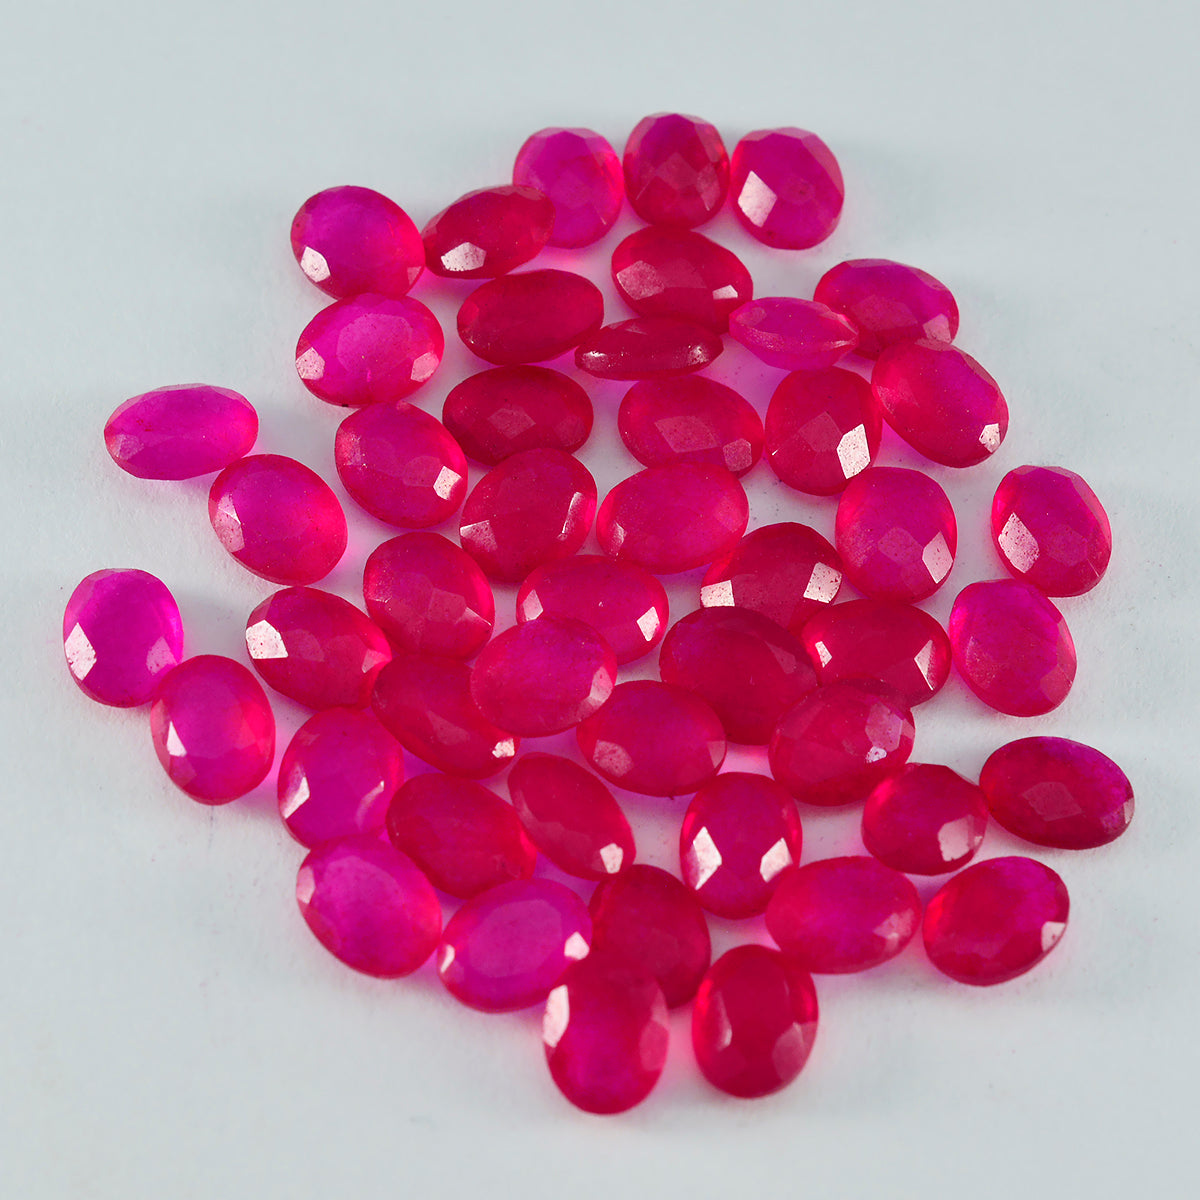 Riyogems 1PC echte rode jaspis gefacetteerd 6x8 mm ovale vorm mooie kwaliteit edelsteen